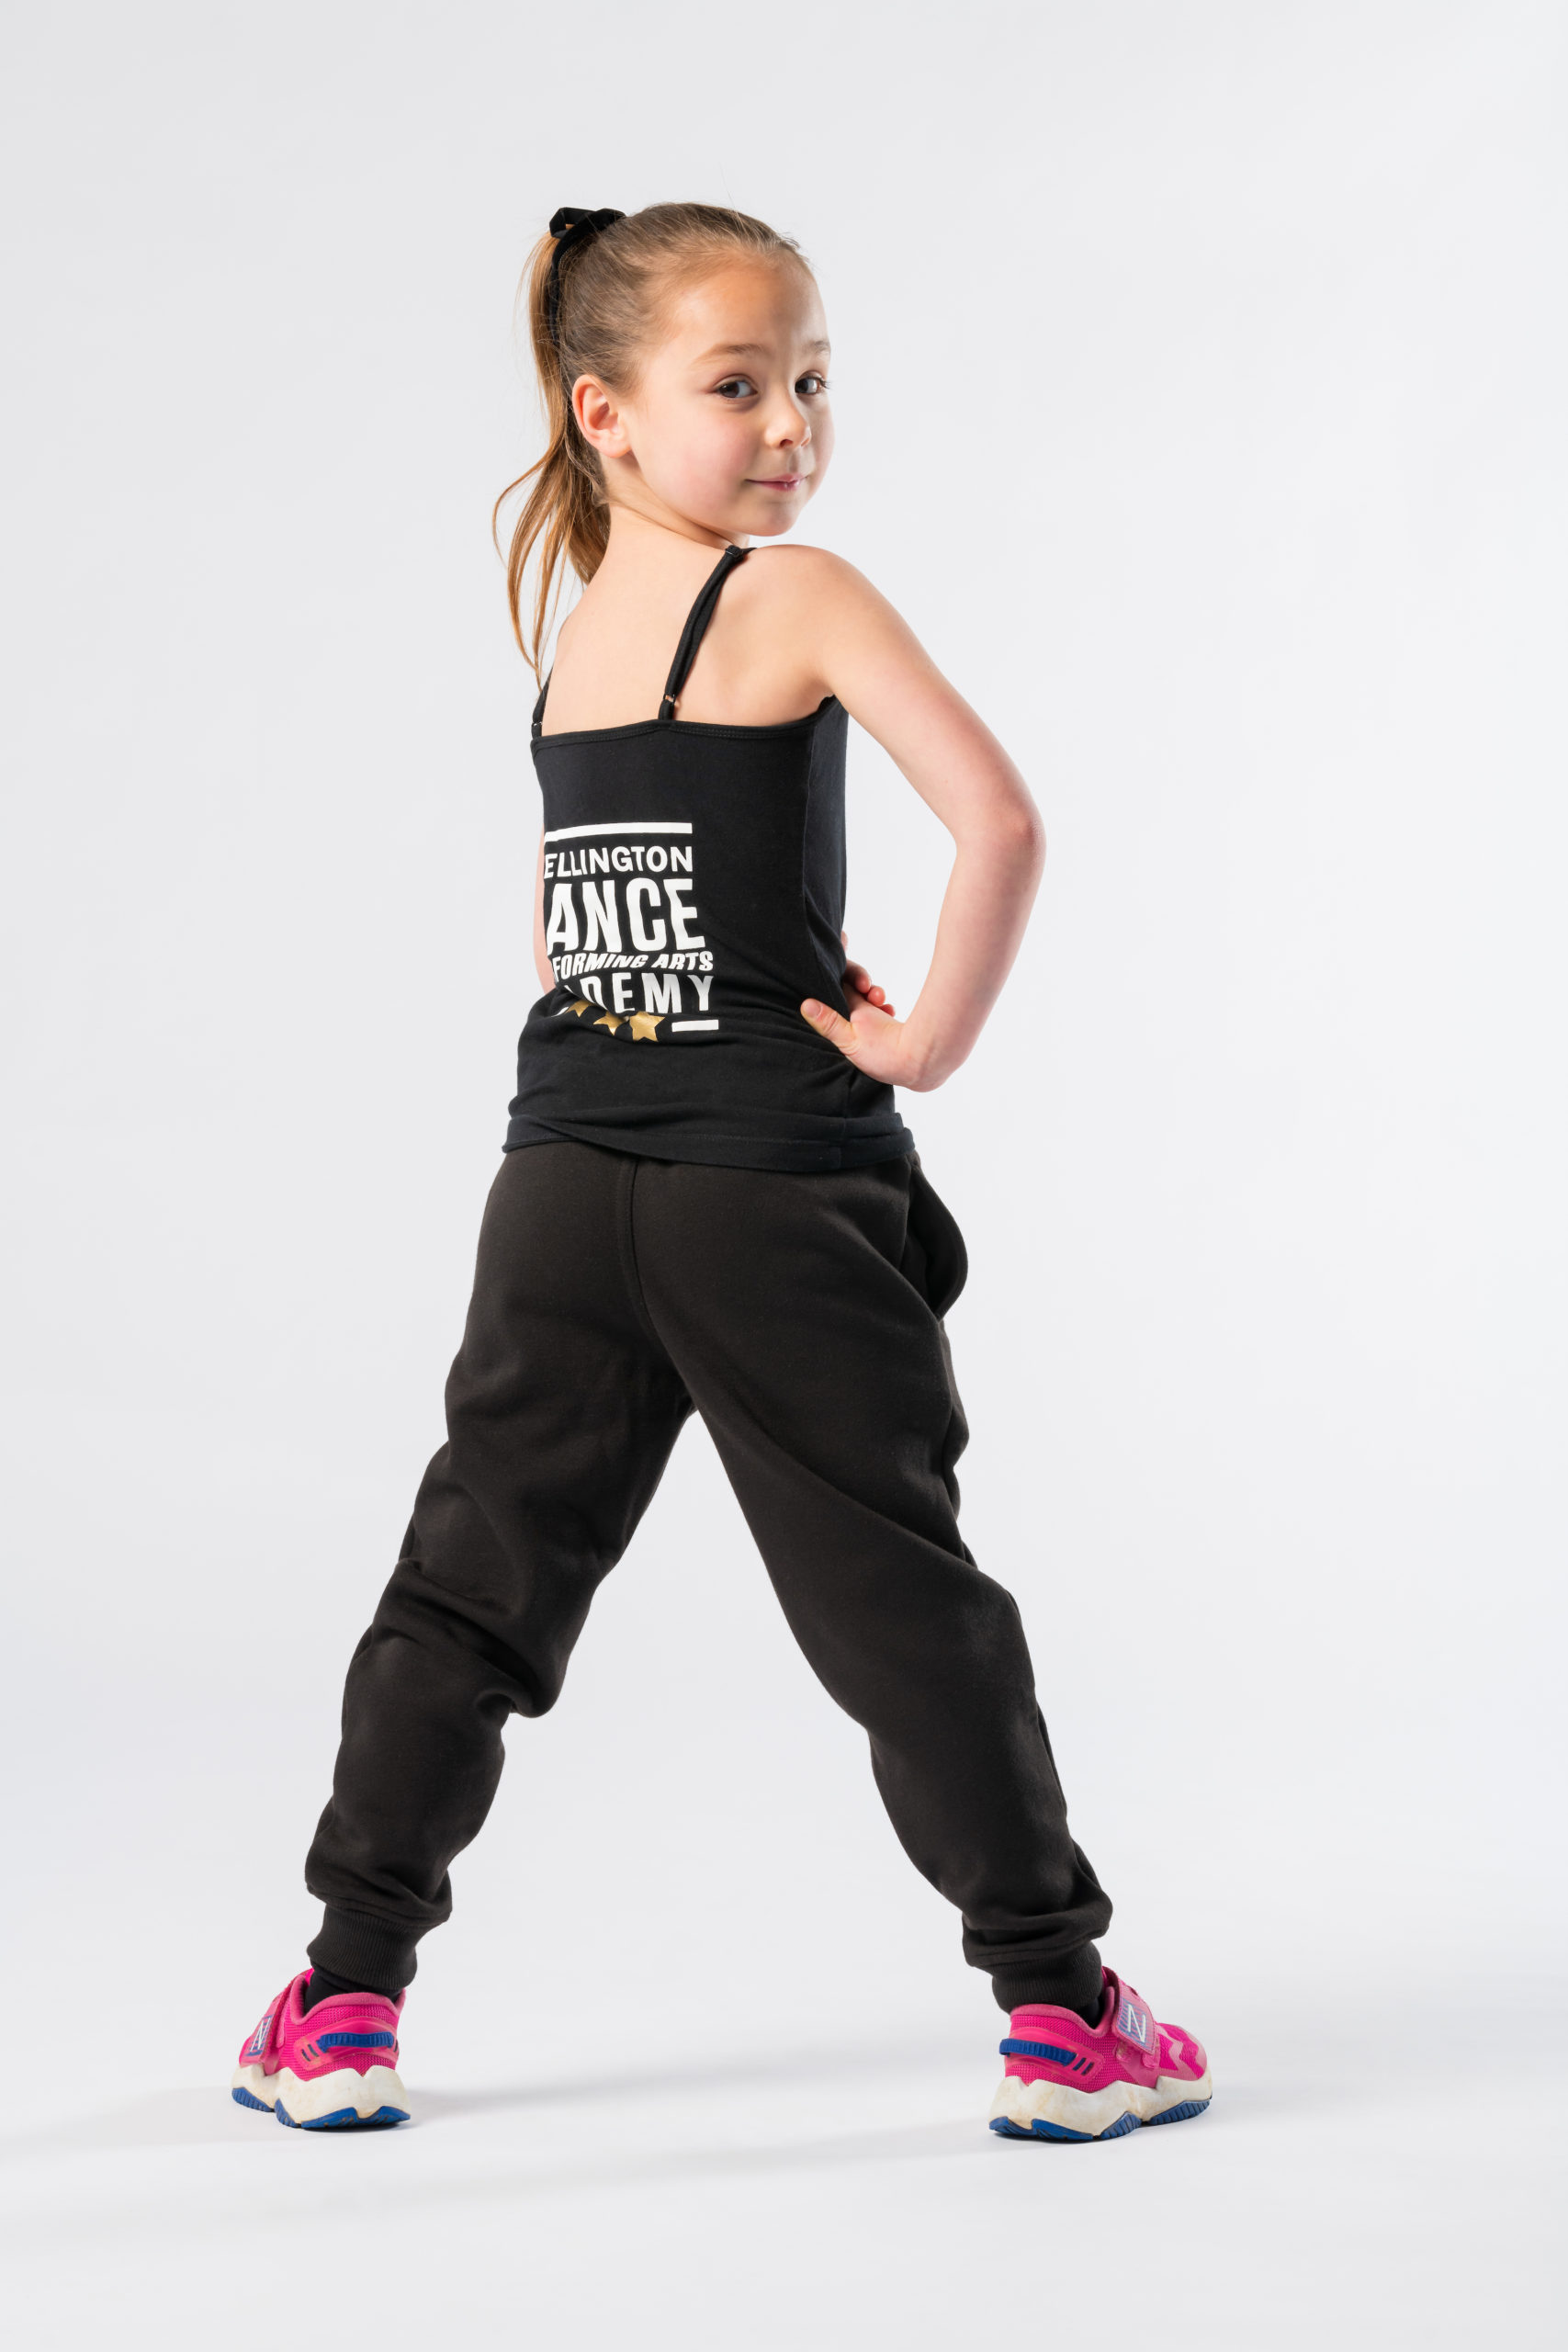 What Do Hip-Hop Dancers Wear? - Dance Poise | Hip hop dancer, Dance  photography, Dance poses